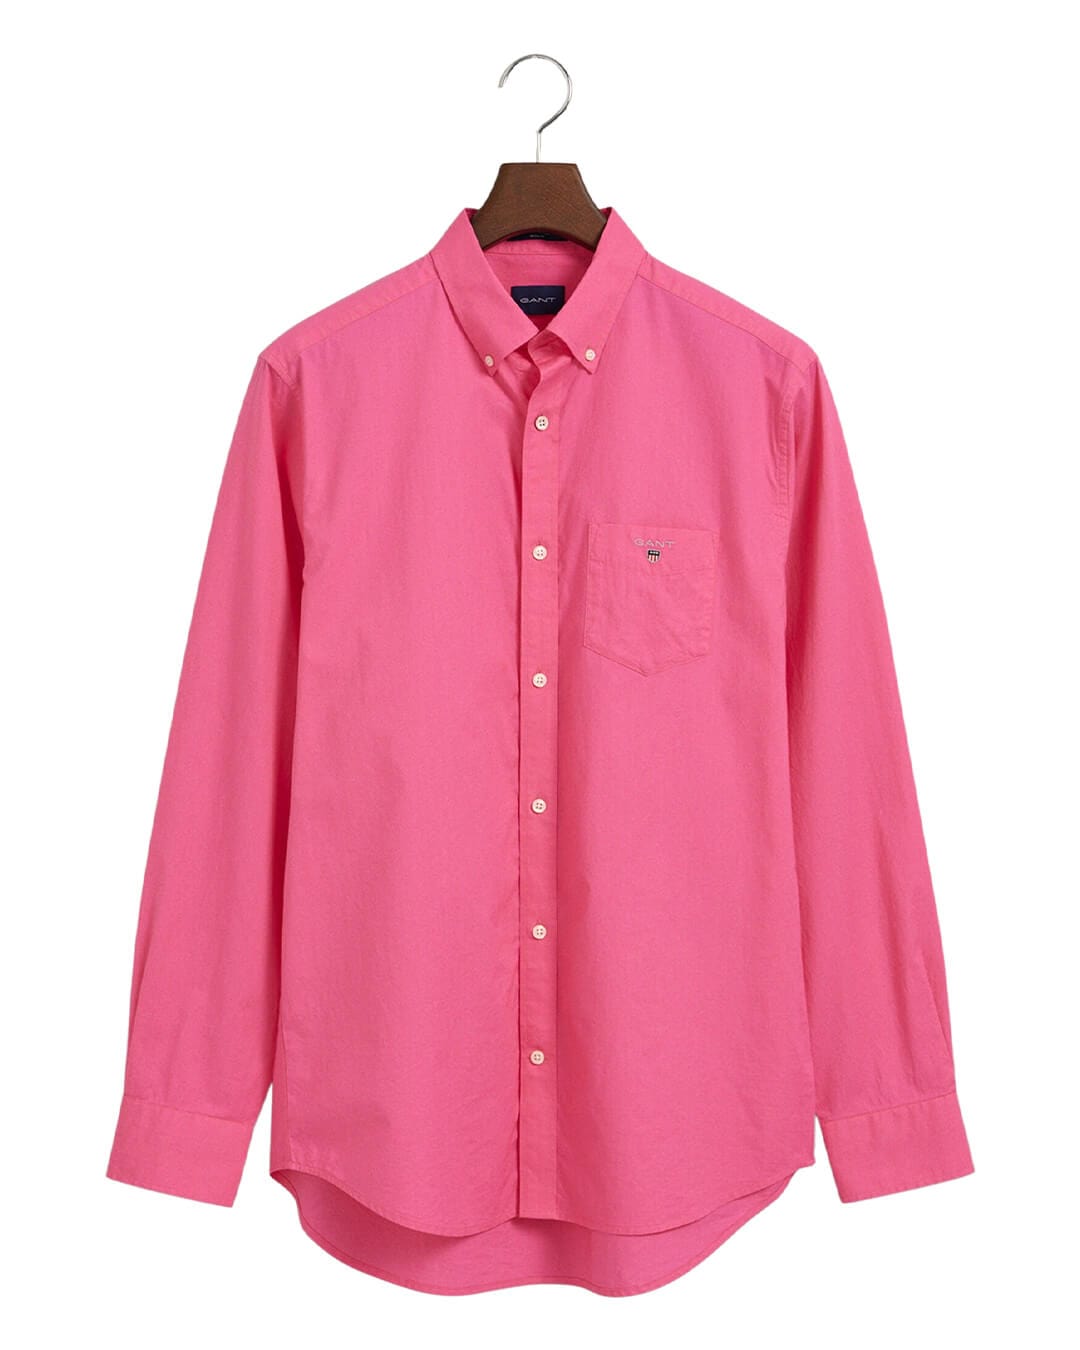 Gant Shirts Gant Pink Regular Fit Broadcloth Shirt